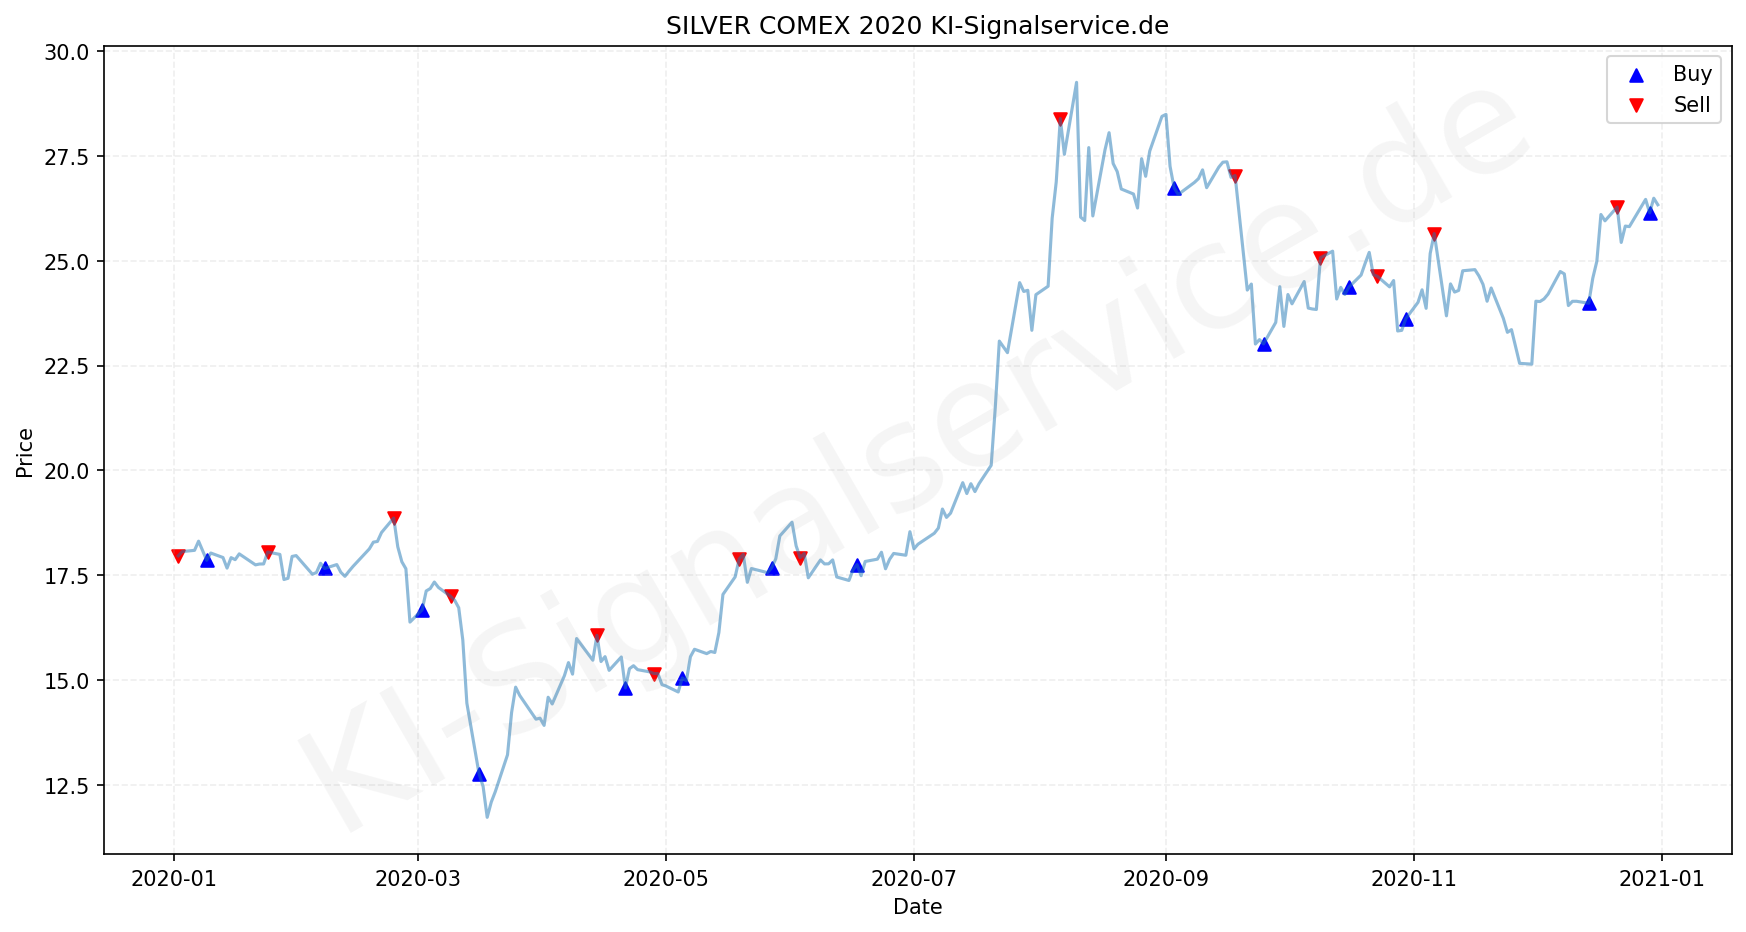 Silver Chart - KI Tradingsignale 2020